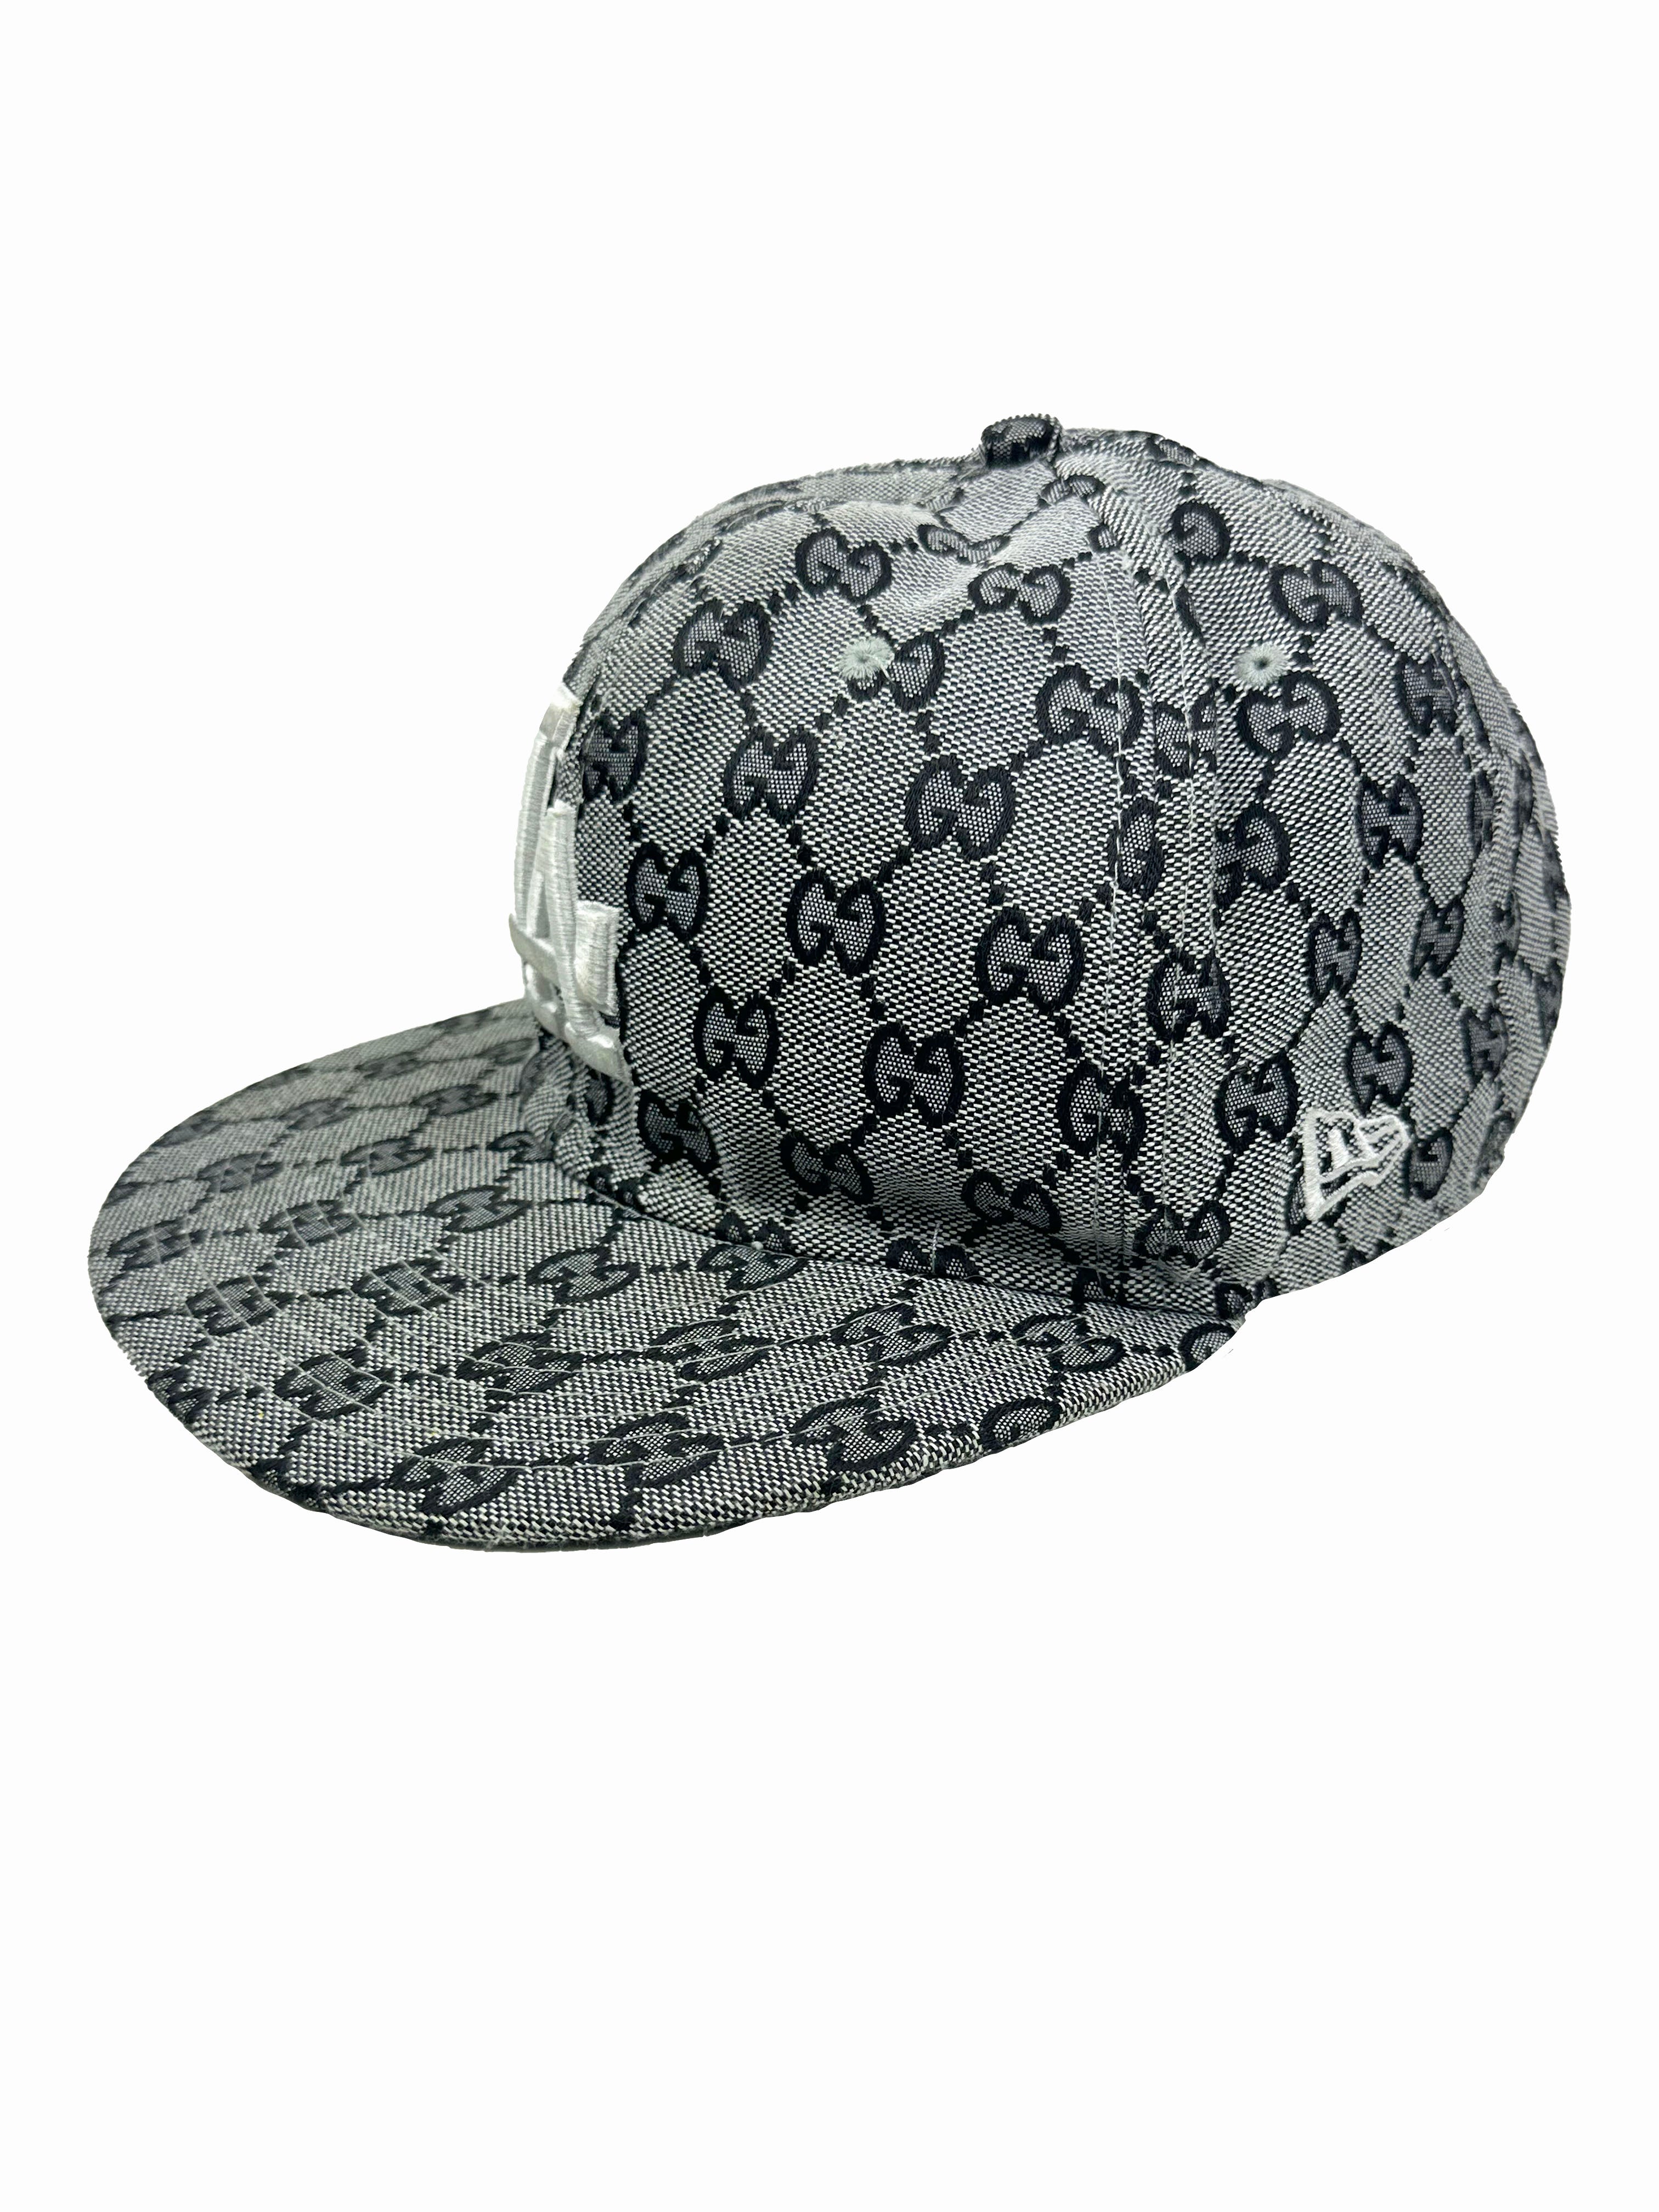 New Era Grey Gucci Hat 00's